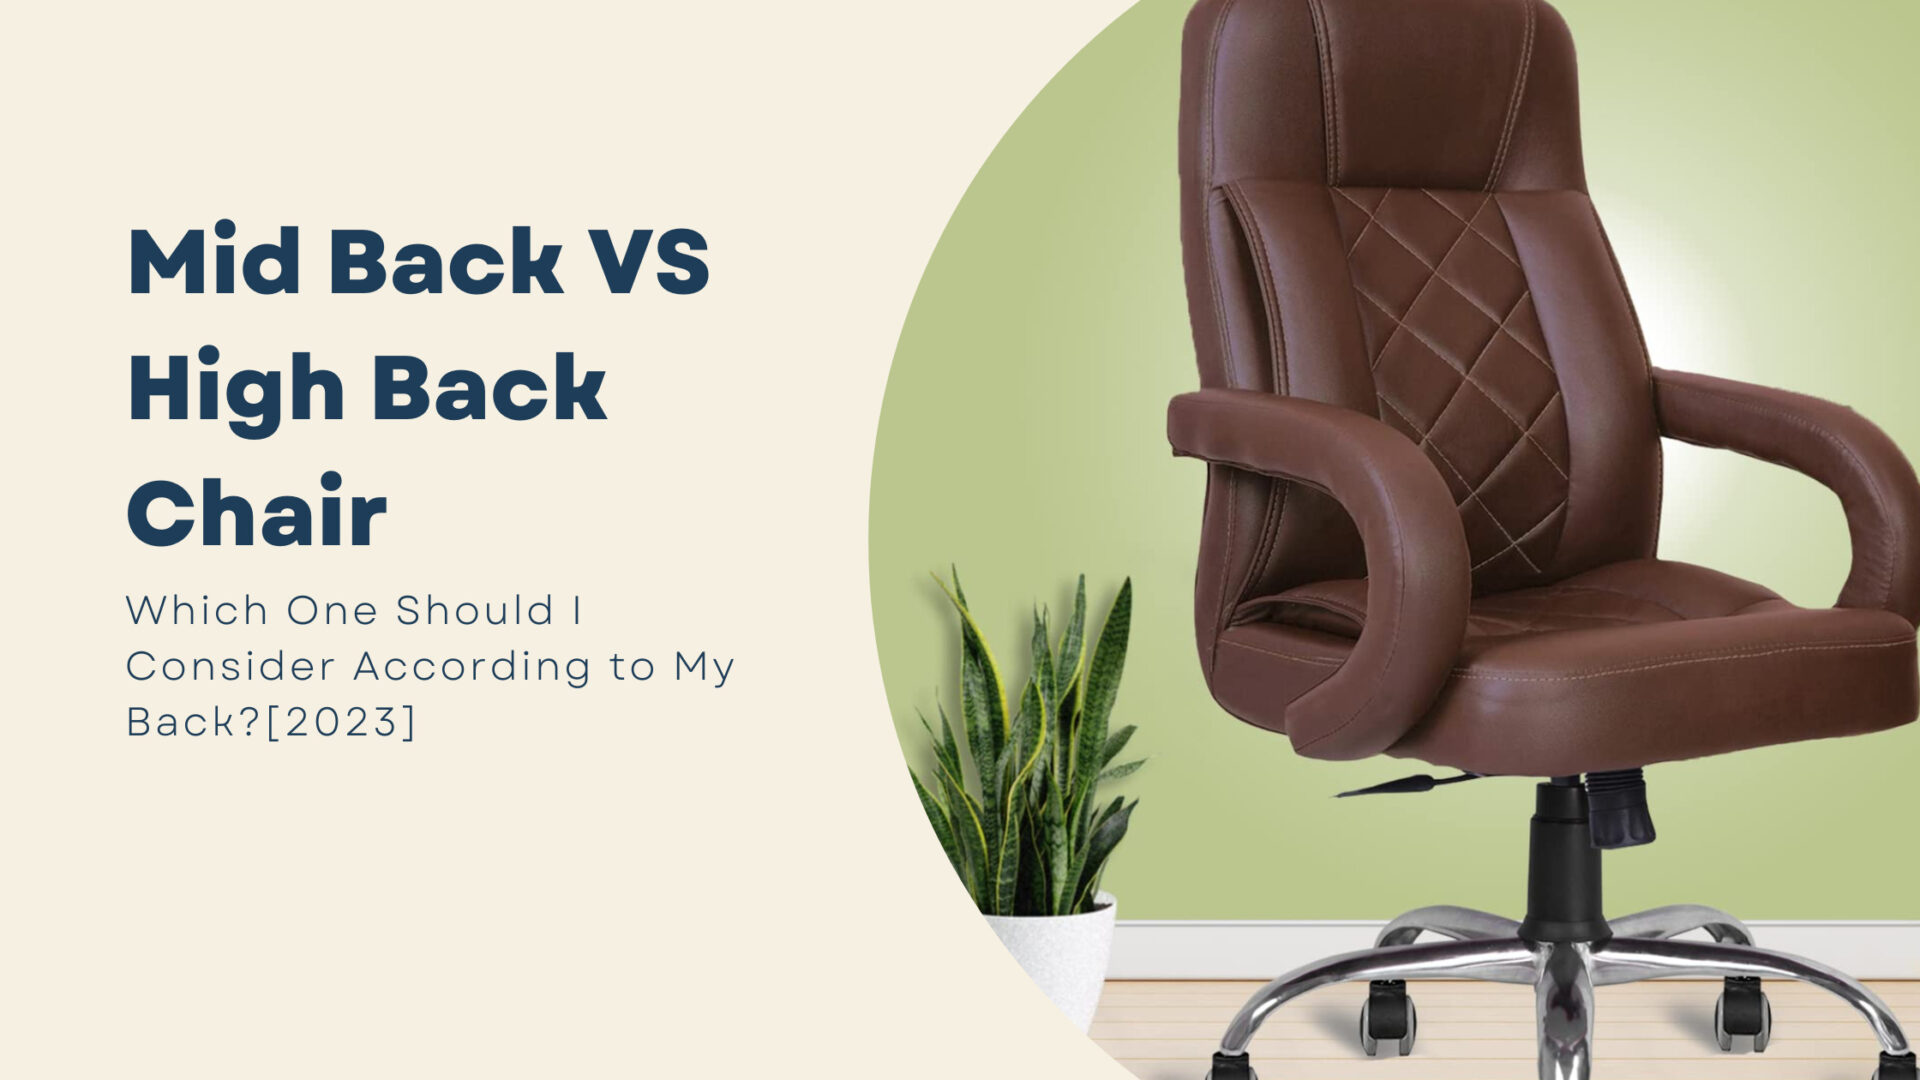 Mid Back VS High Back Chair